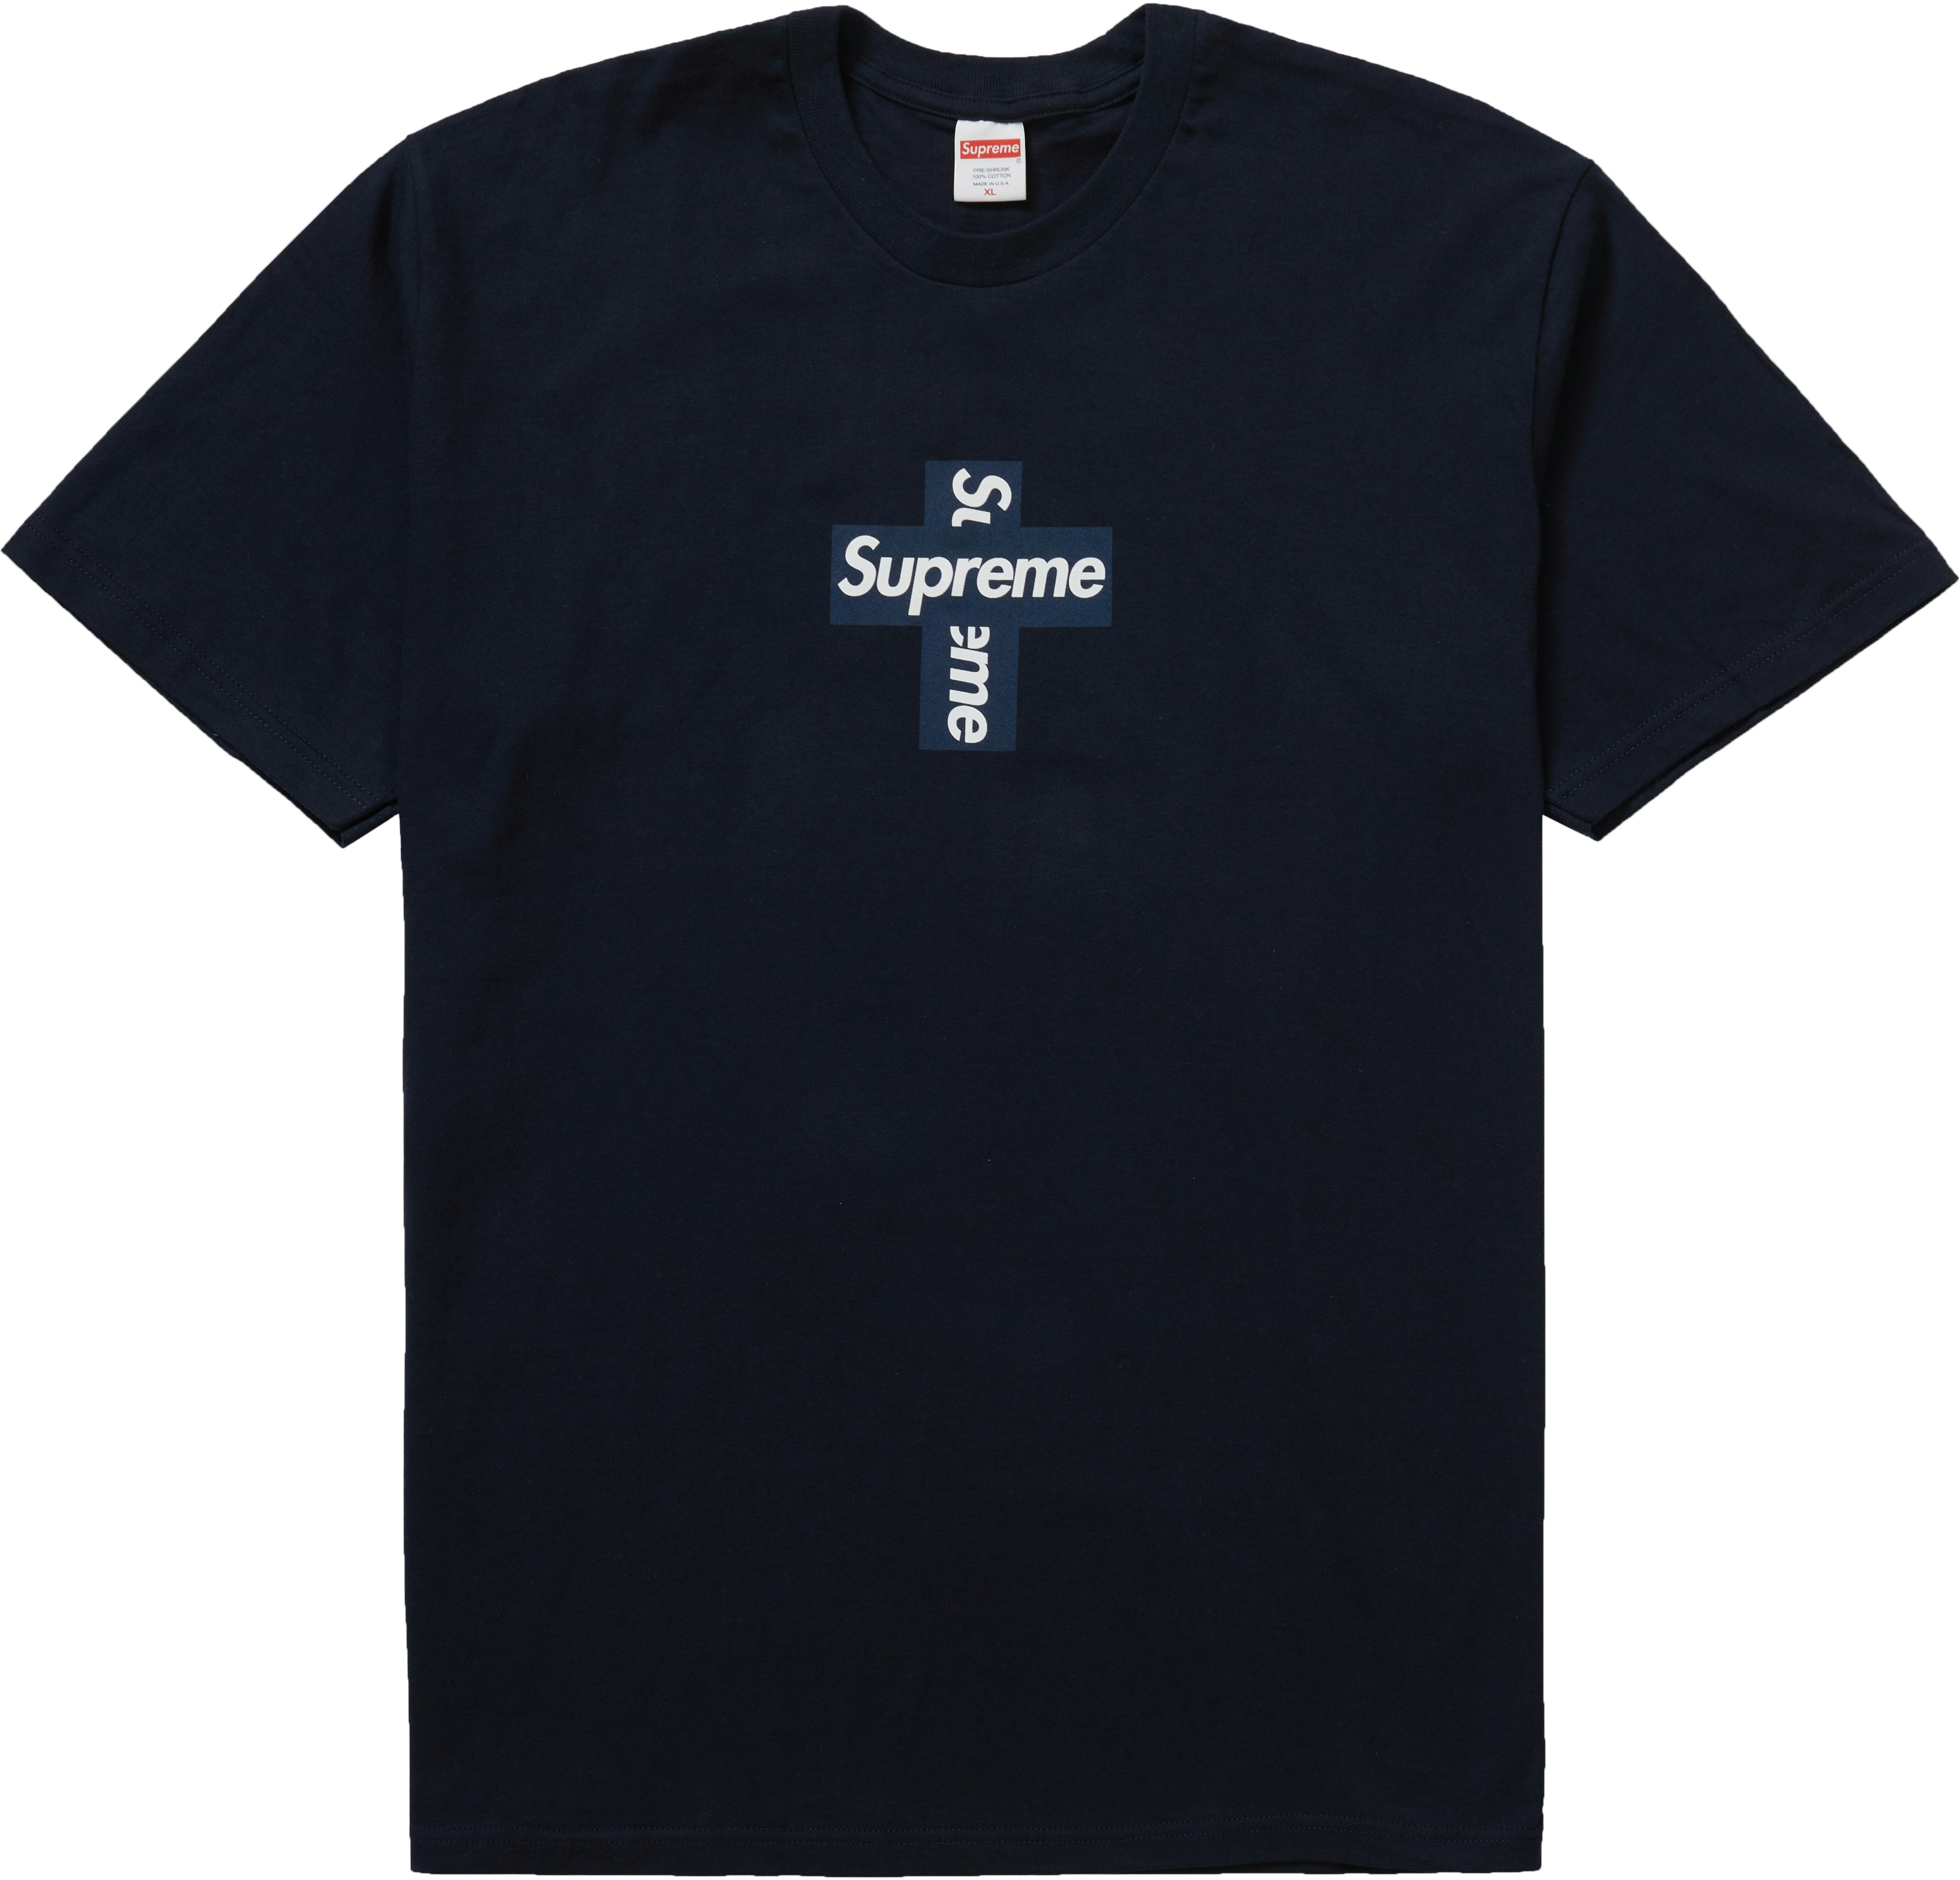 Supreme Cross Box Logo Tee Navy - Novelship